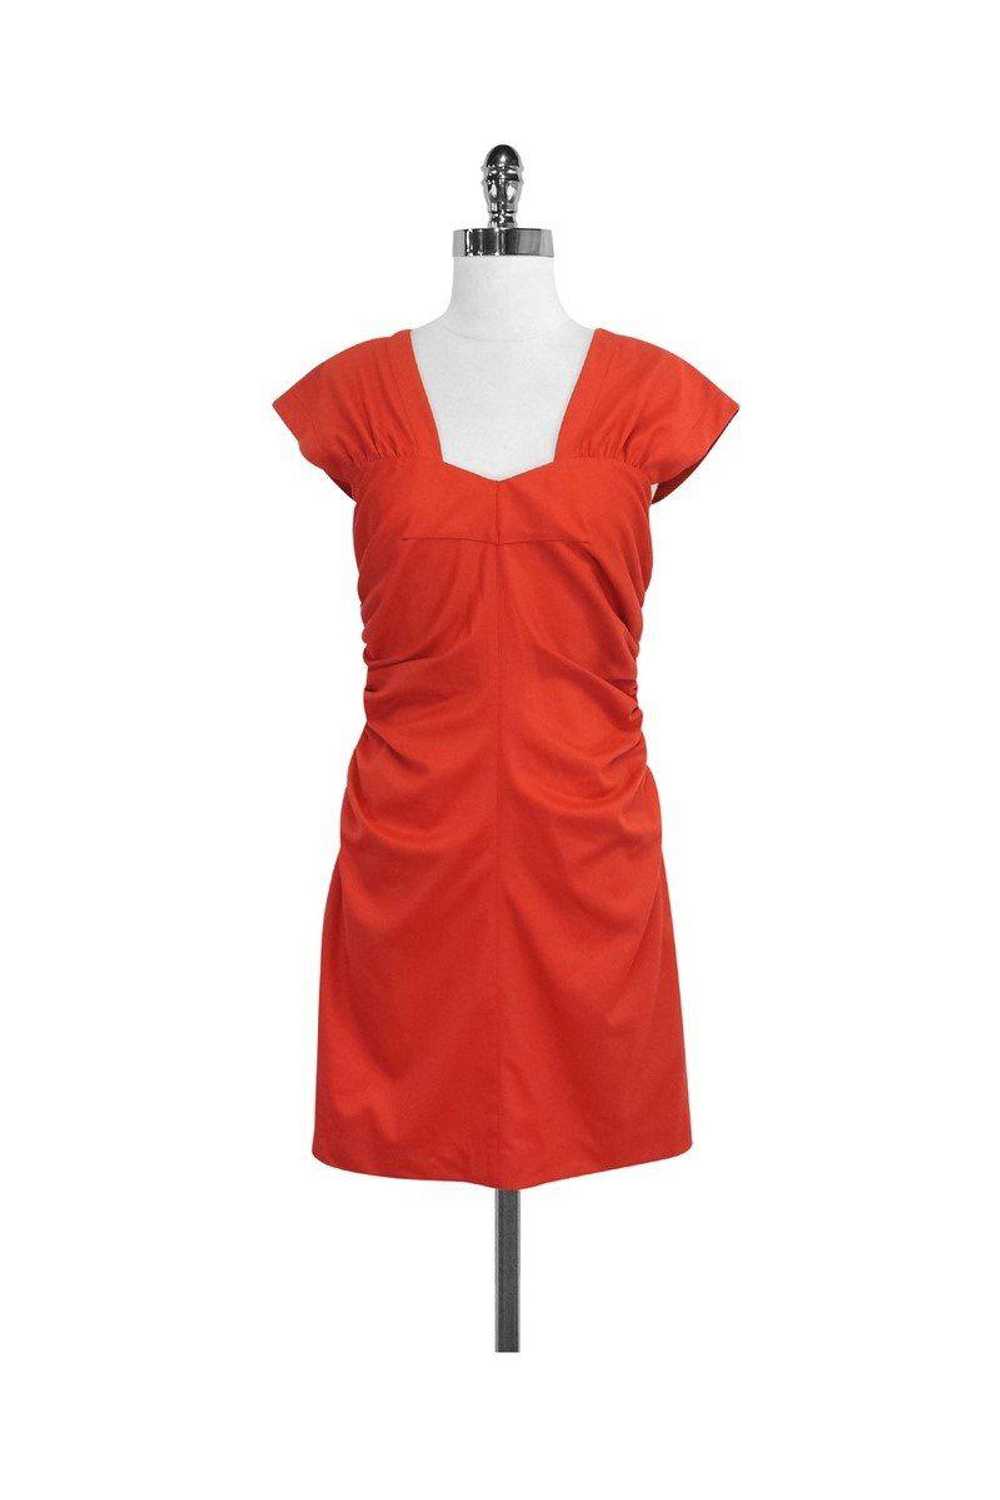 Robert Rodriguez - Deep Orange Gathered Dress Sz 4 - image 1